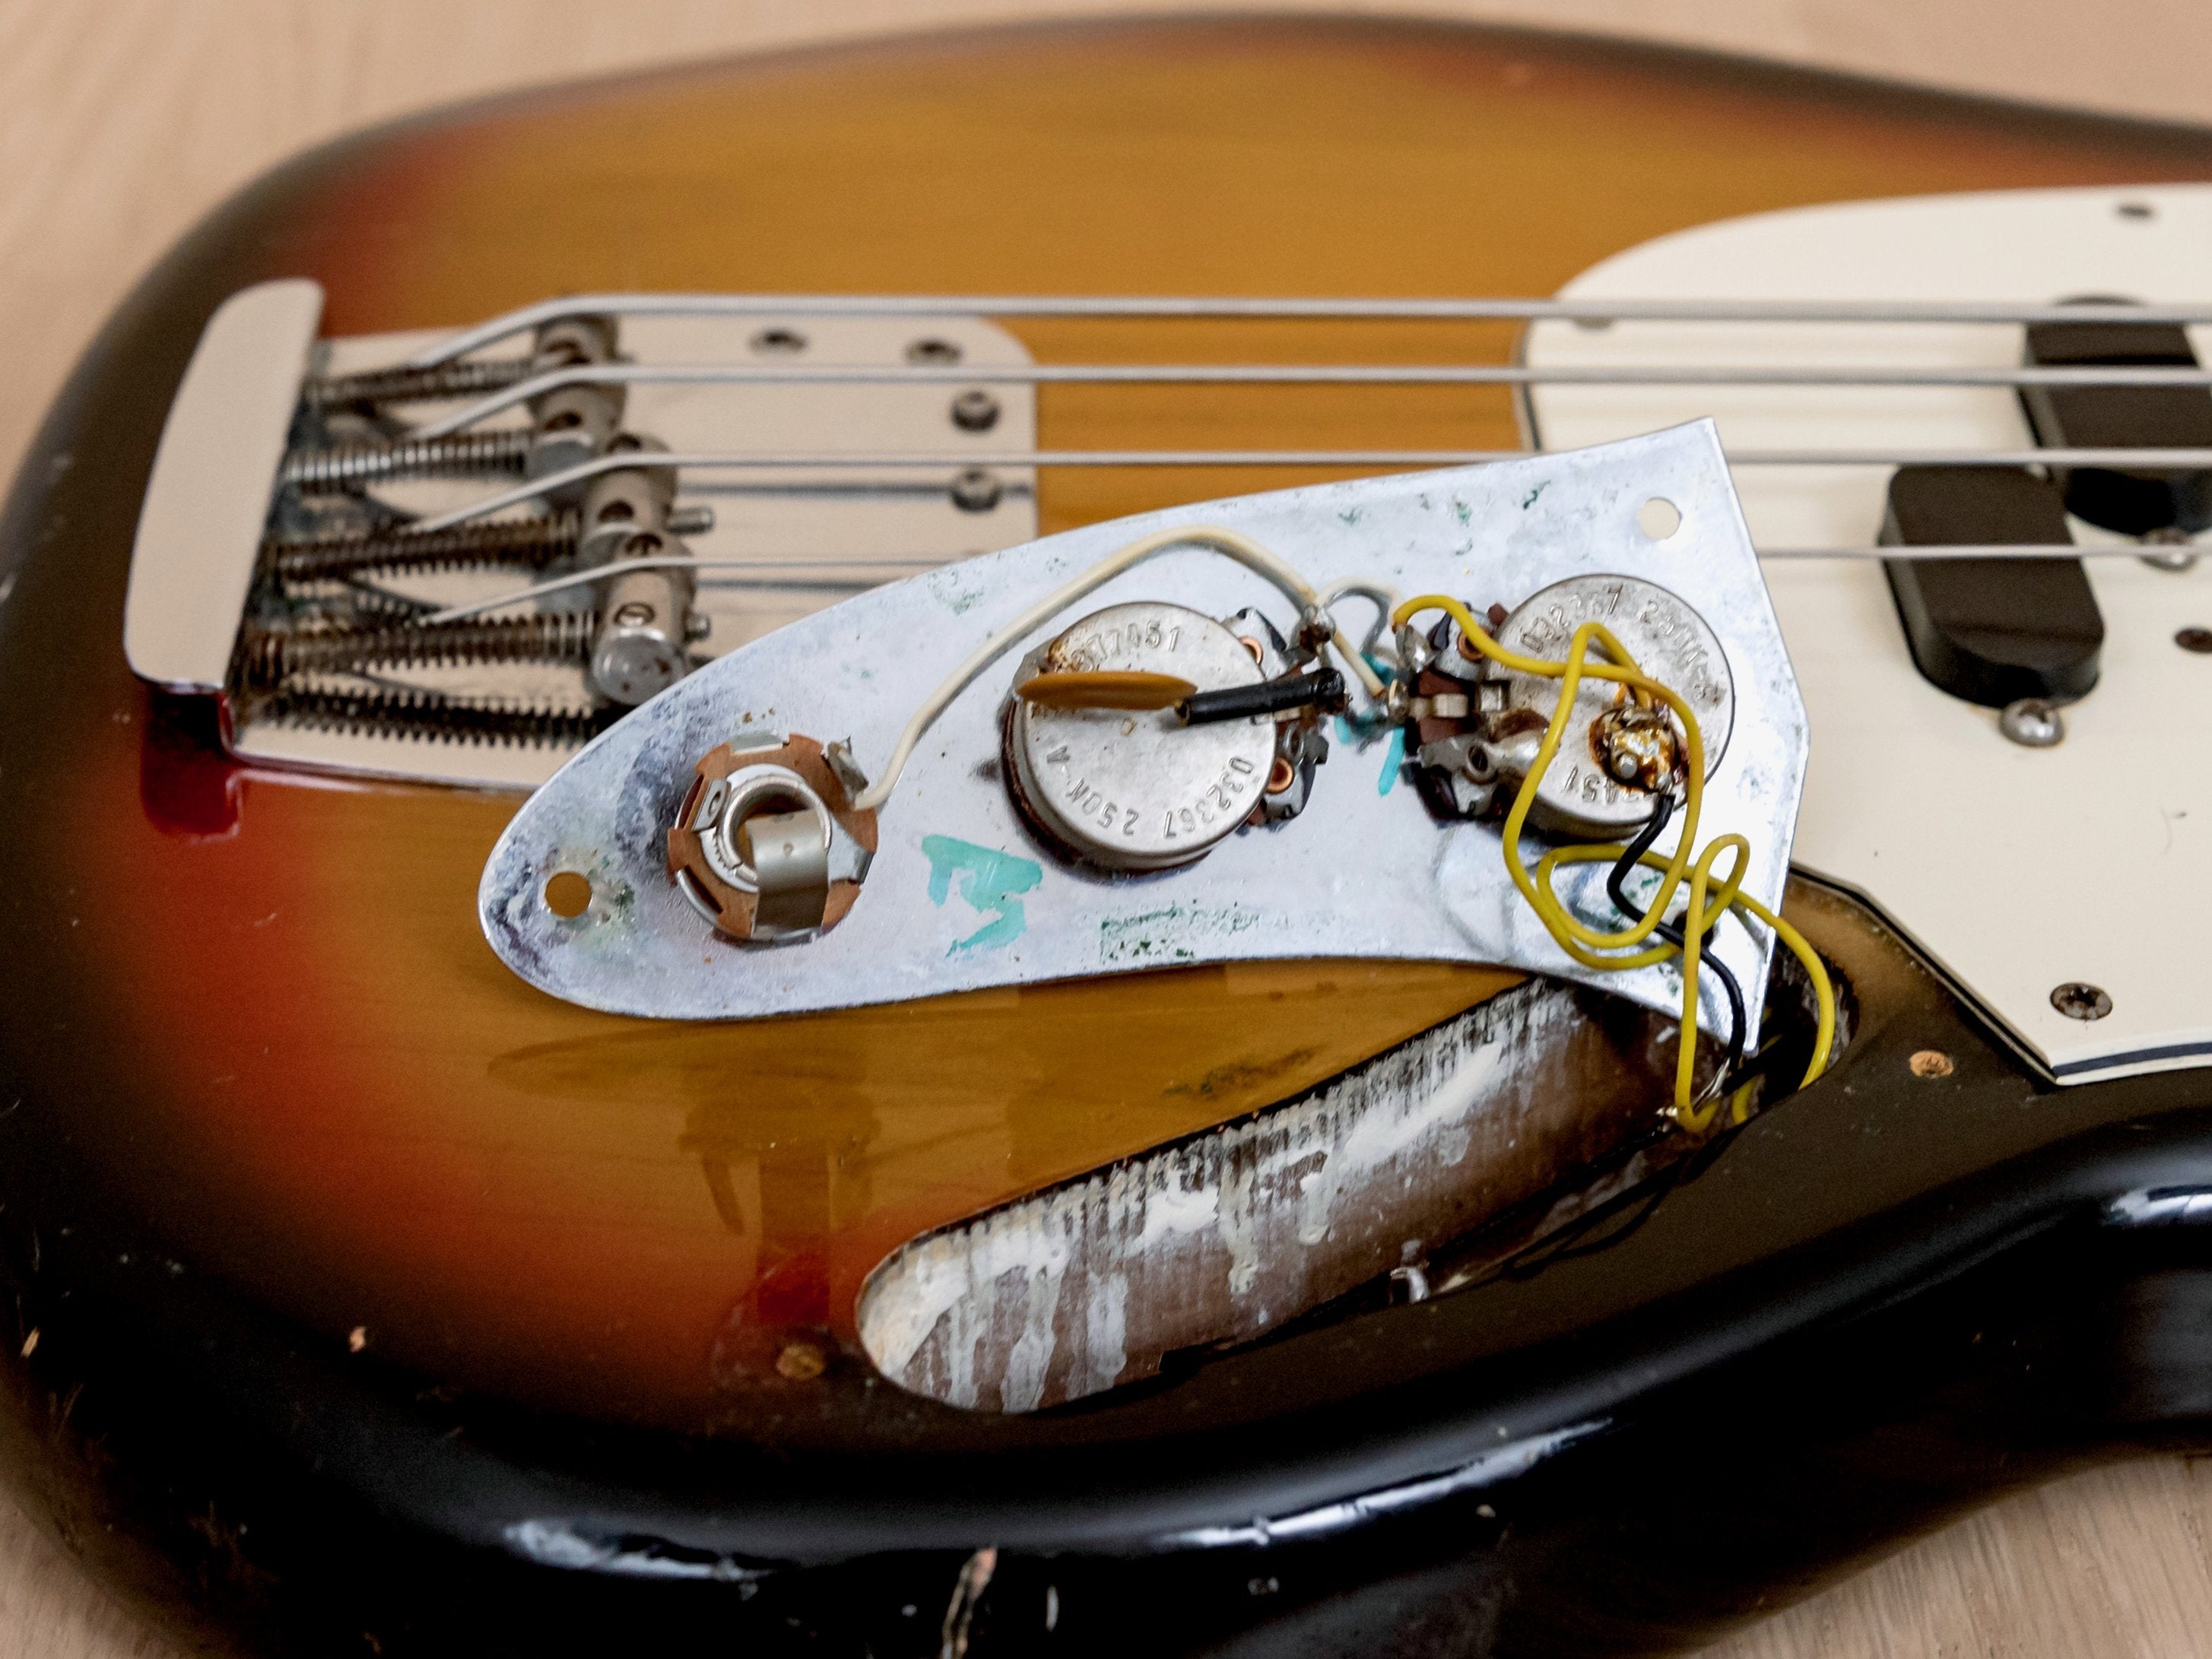 1975 Fender Mustang Bass Vintage Short Scale Bass Sunburst, Ash Body